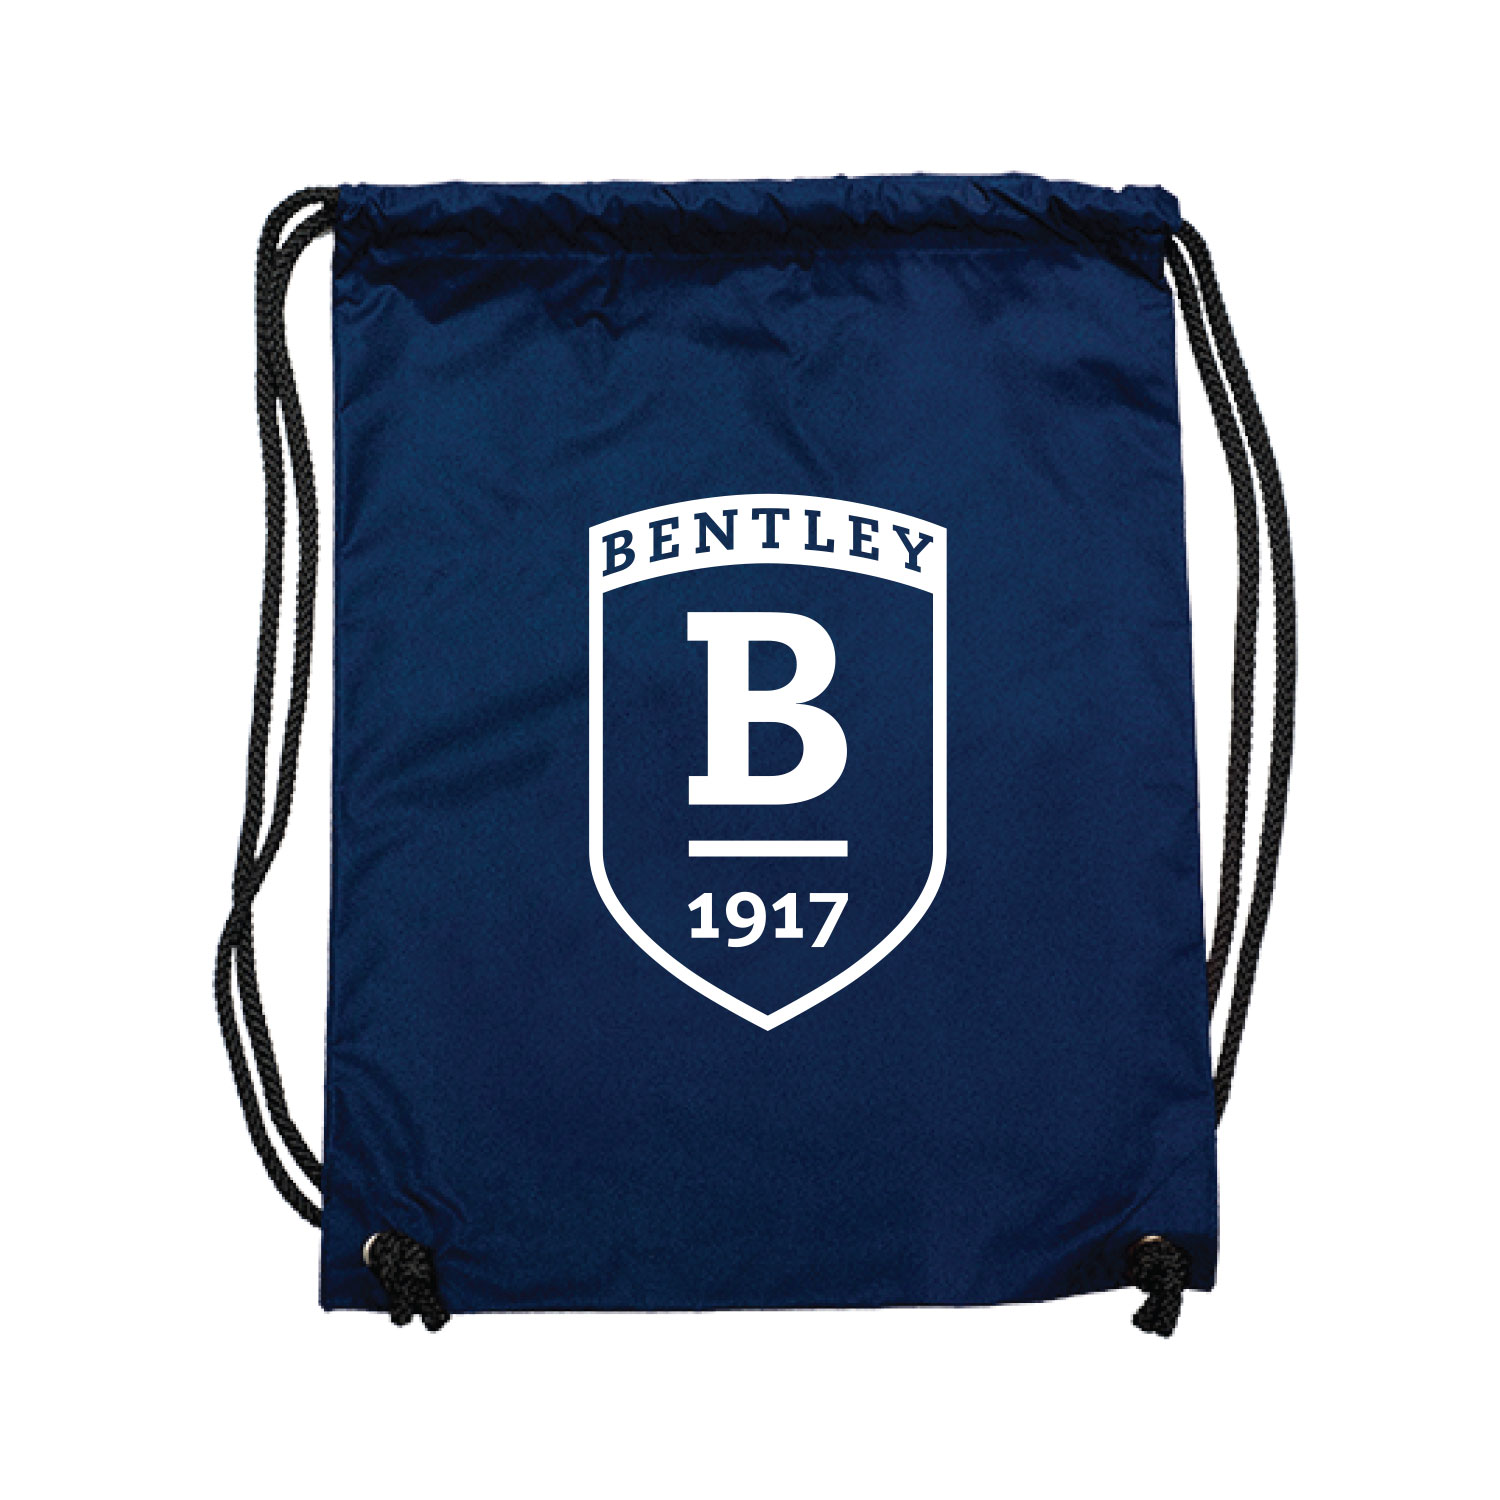 Barnes & Noble @ Bentley University Draw String Backsack